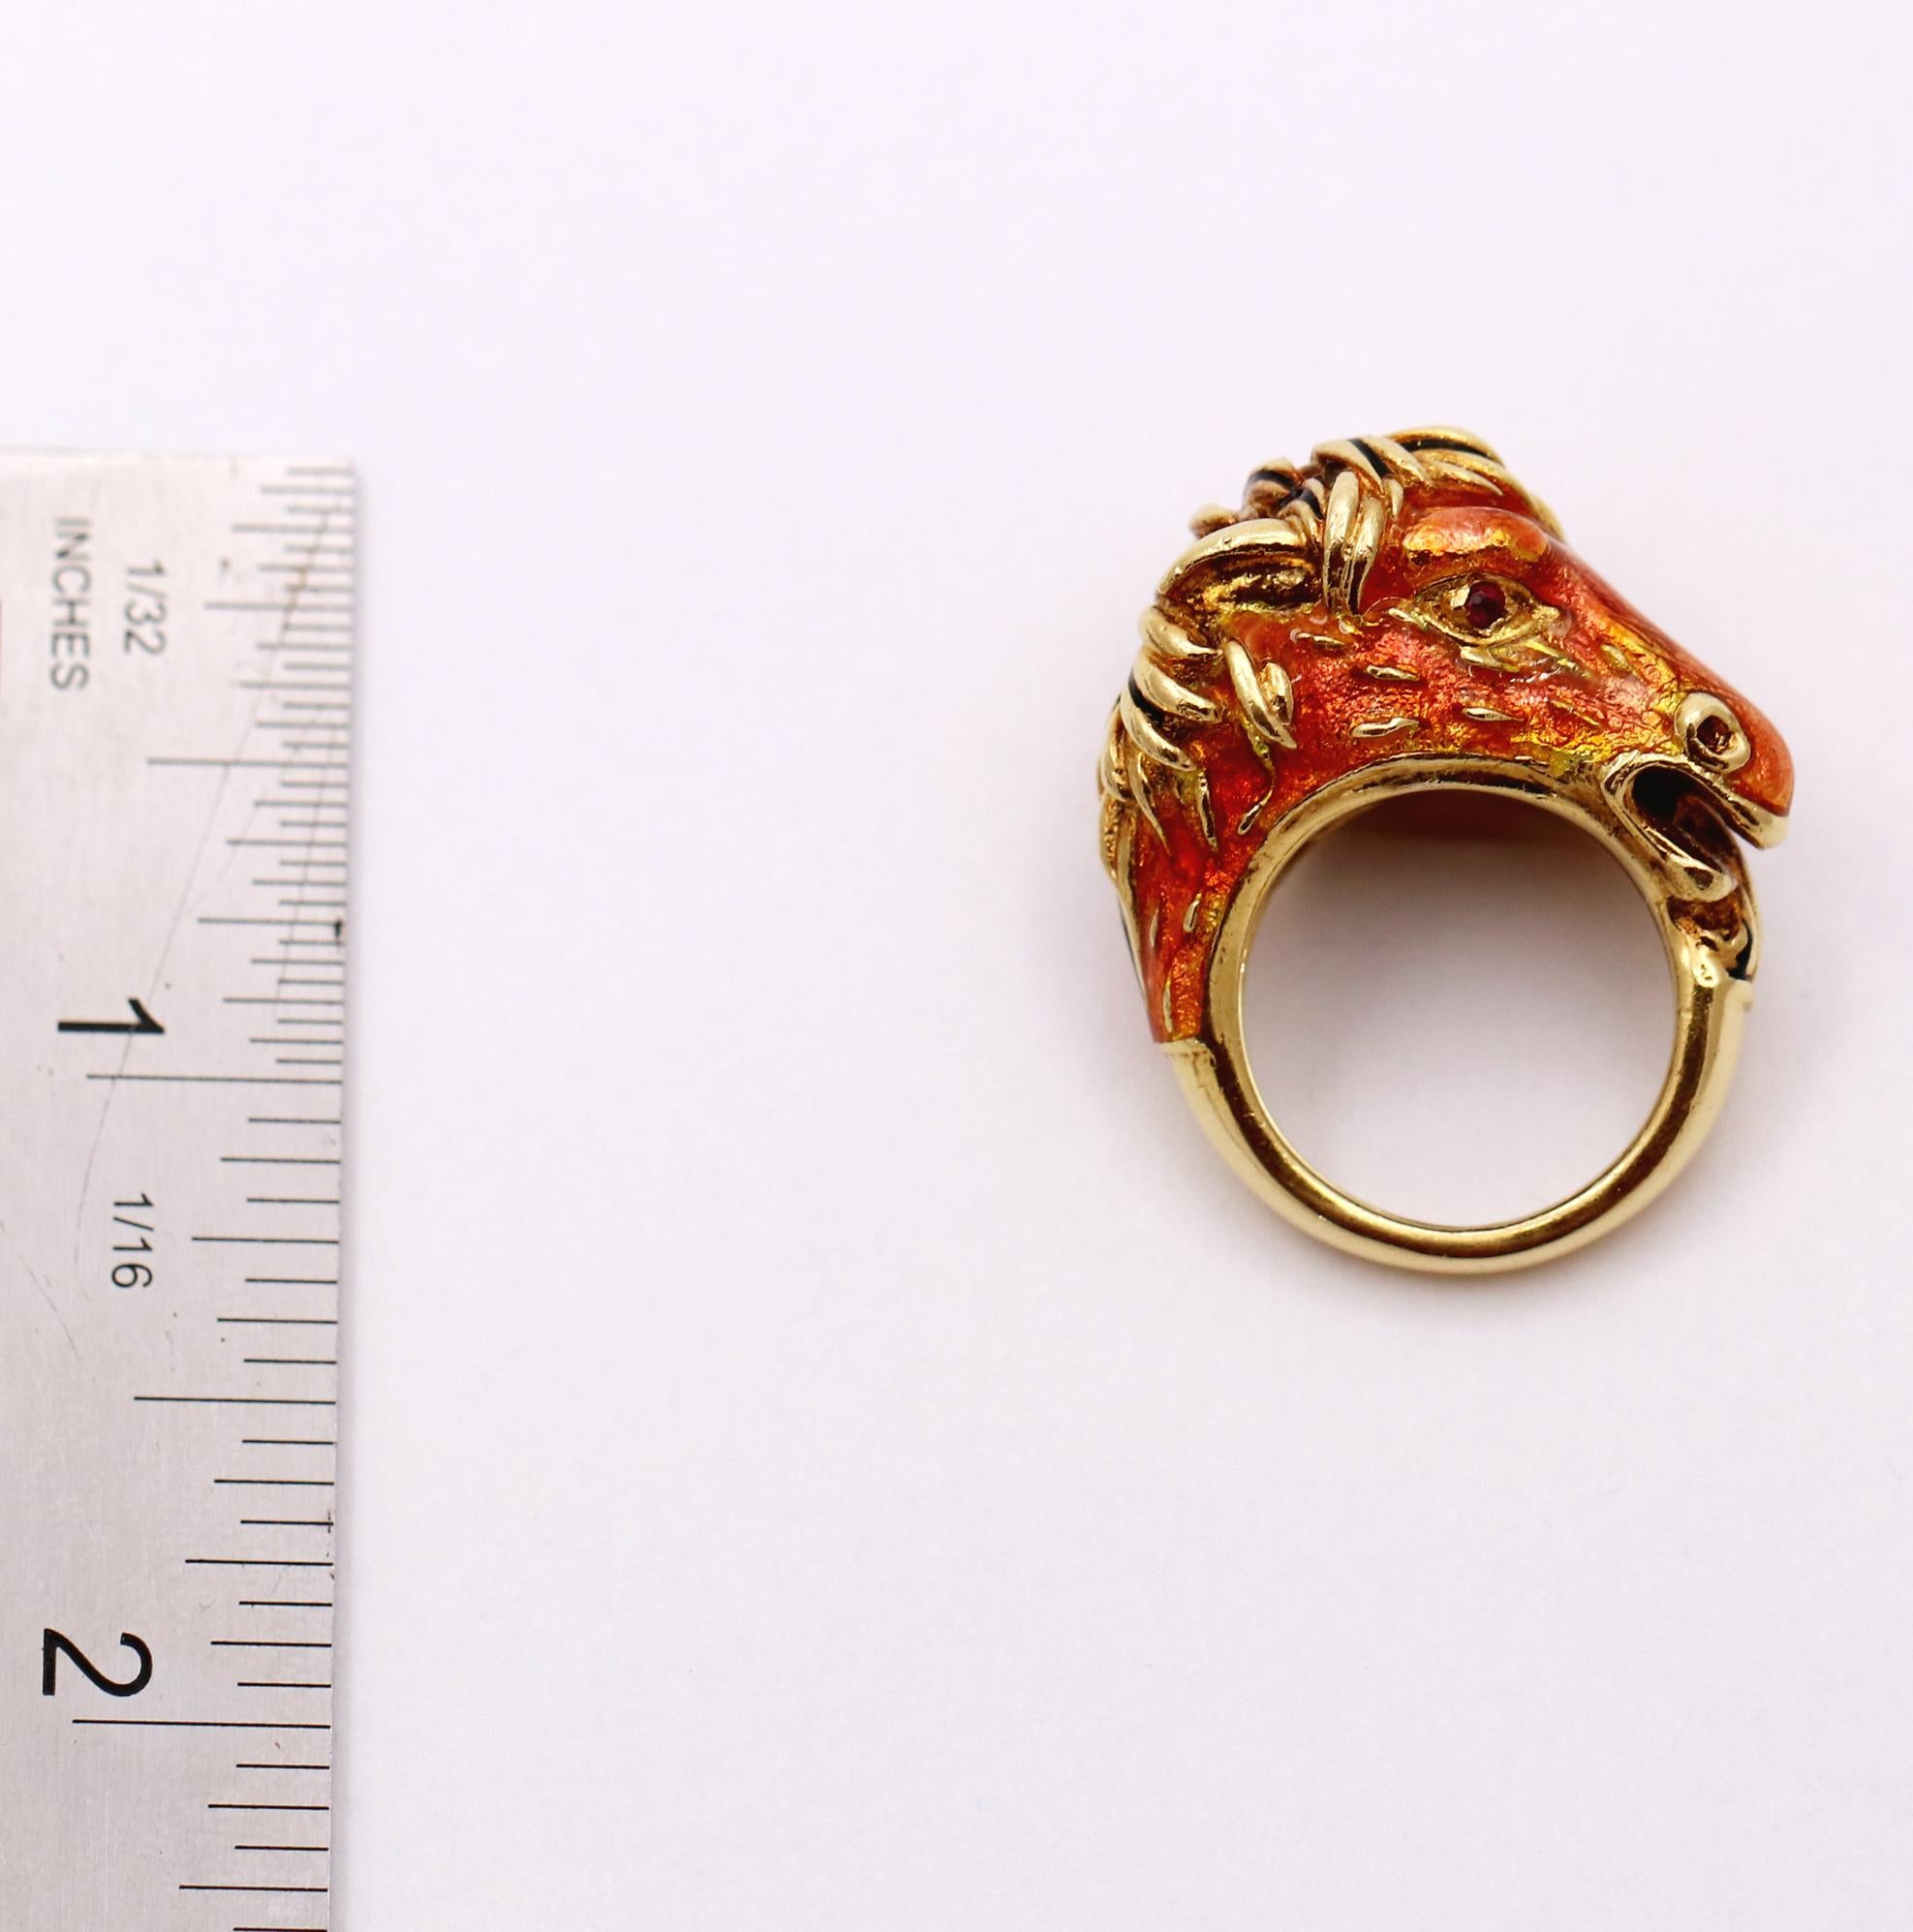 Detailed Enamel Horse Ring by Frascarolo with Ruby Eyes 5